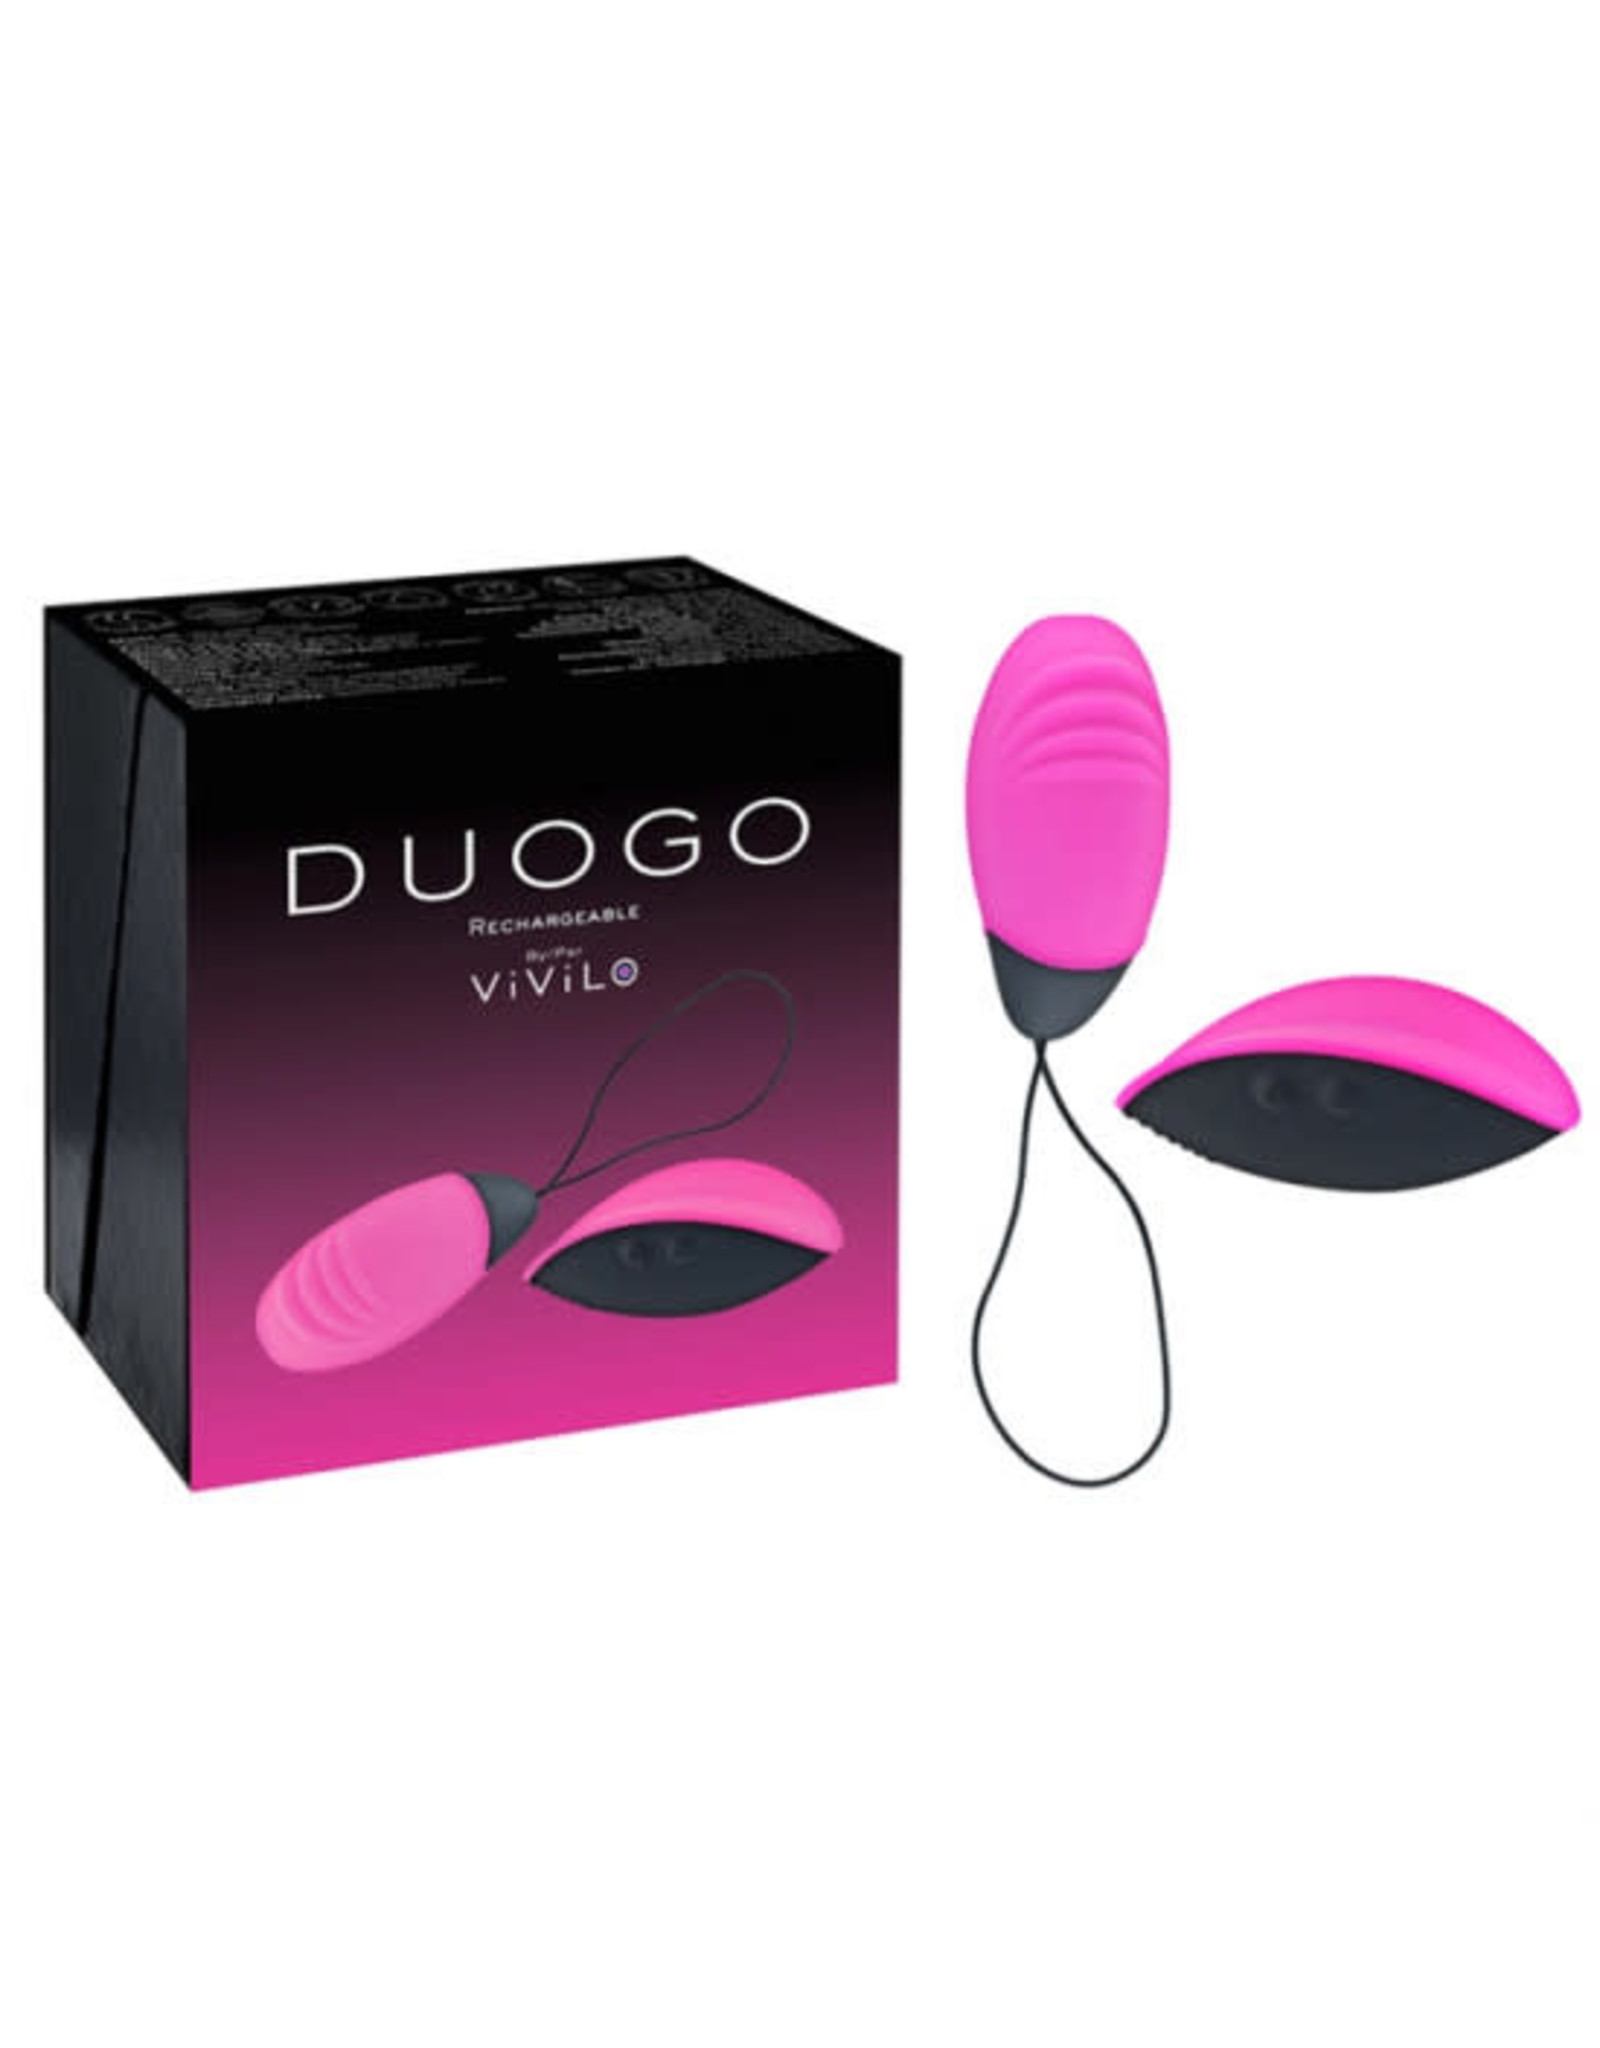 ViVilo Duogo Rechargeable